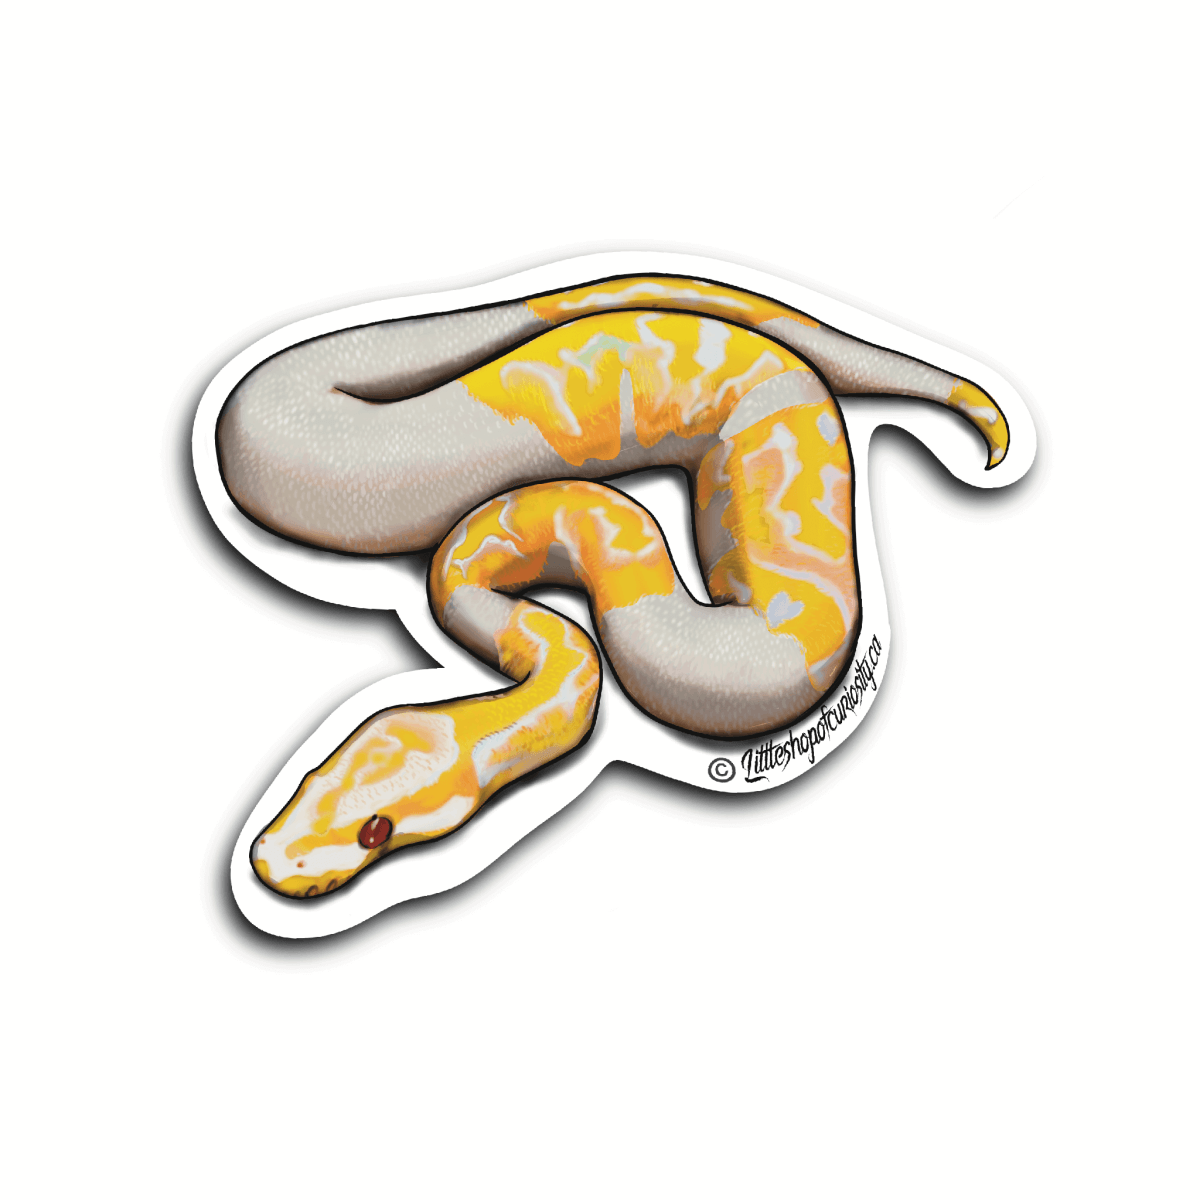 albino ball python